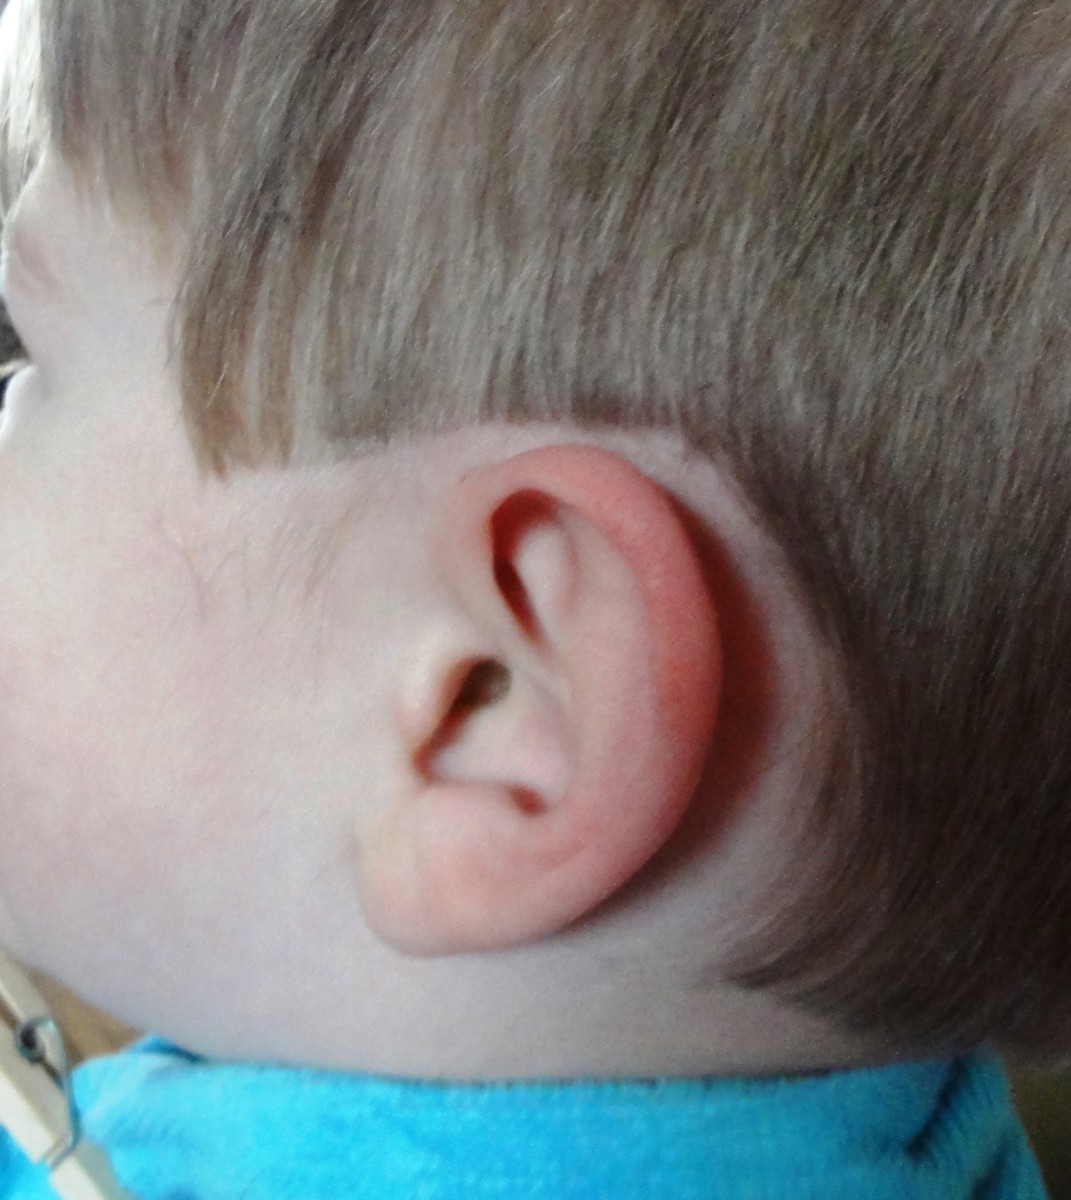 The neatened ear